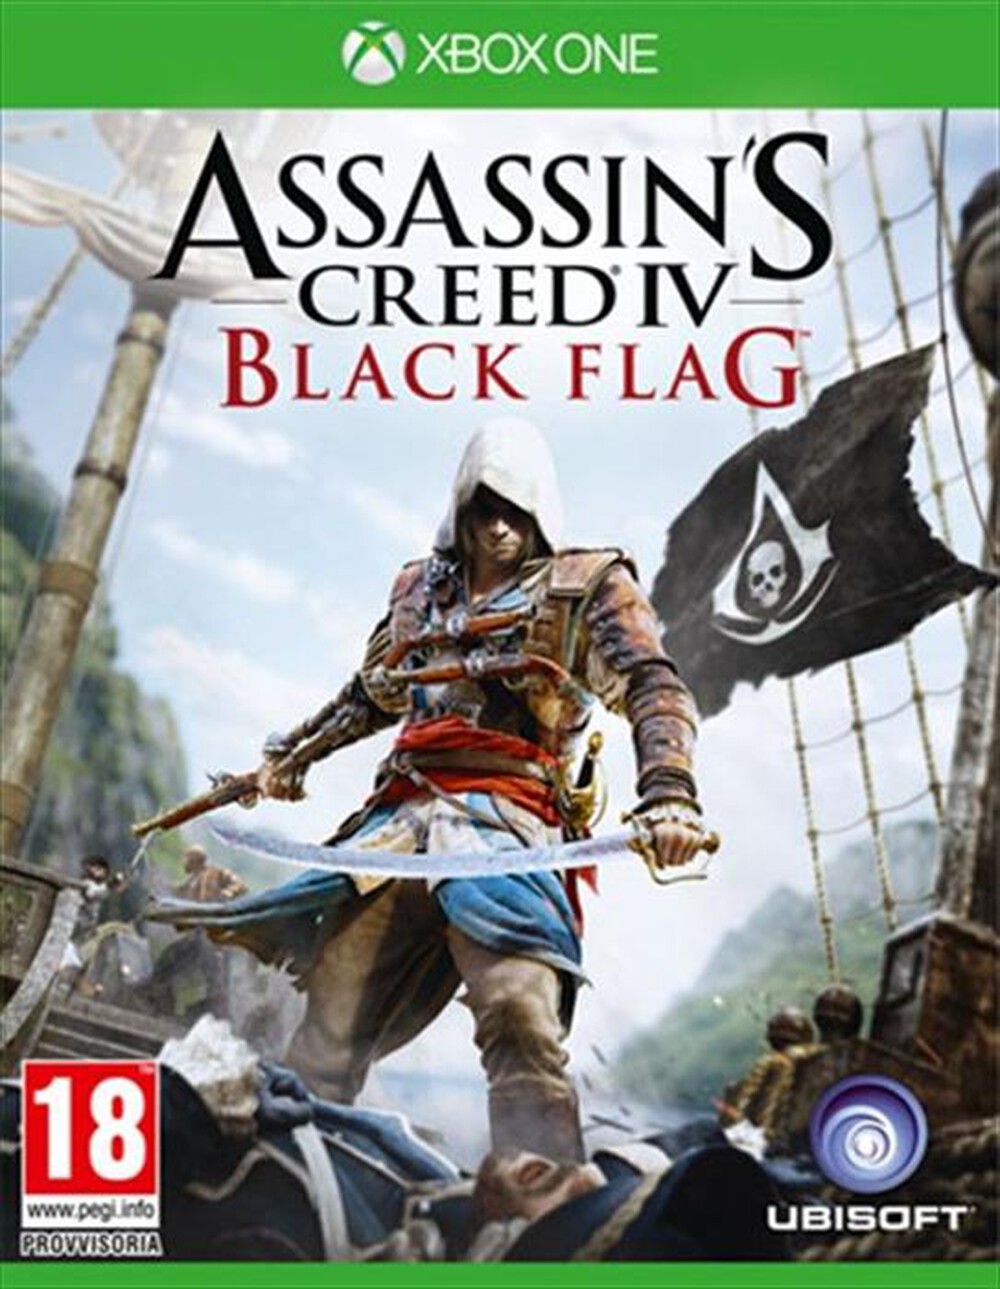 "UBISOFT - Assassin's Creed 4 Black Flag Xbox One"